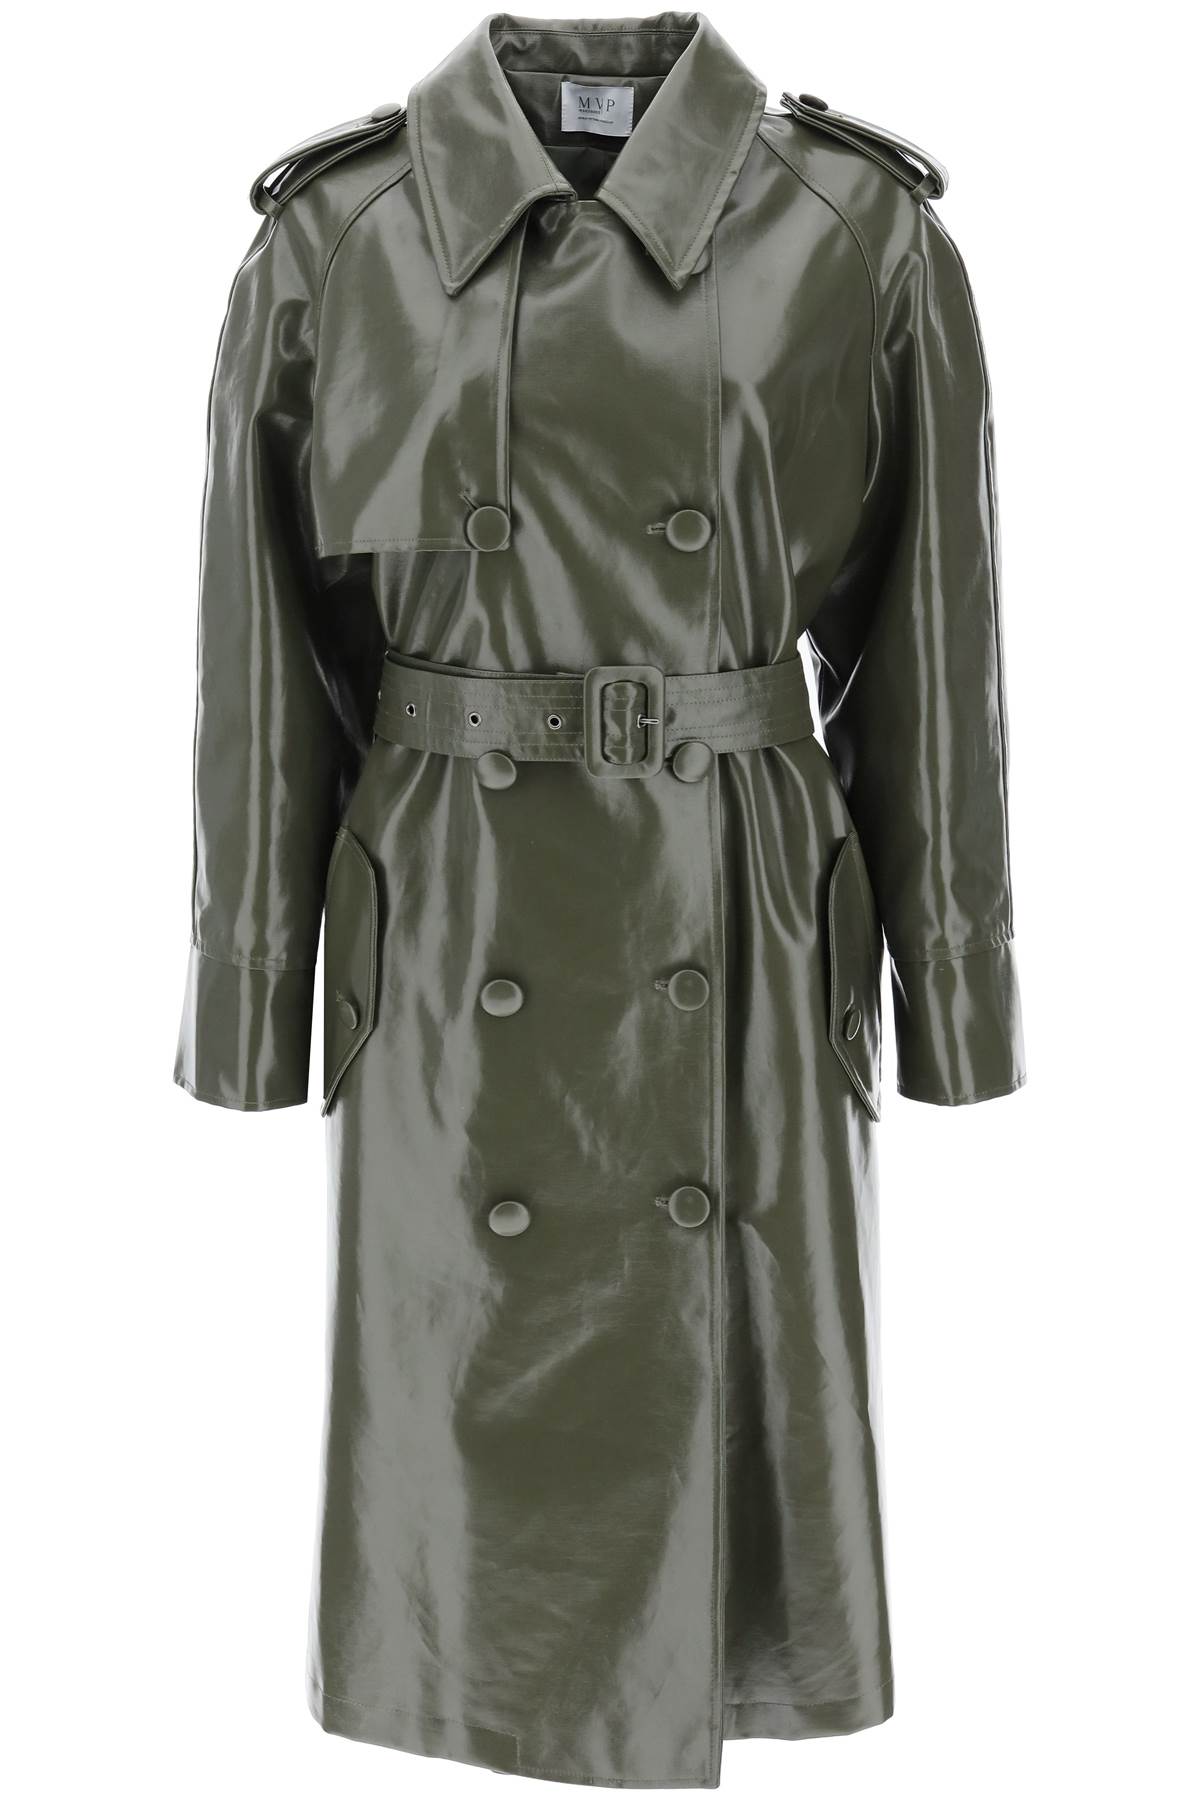 Mvp wardrobe montenapoleone coated trench coat-0